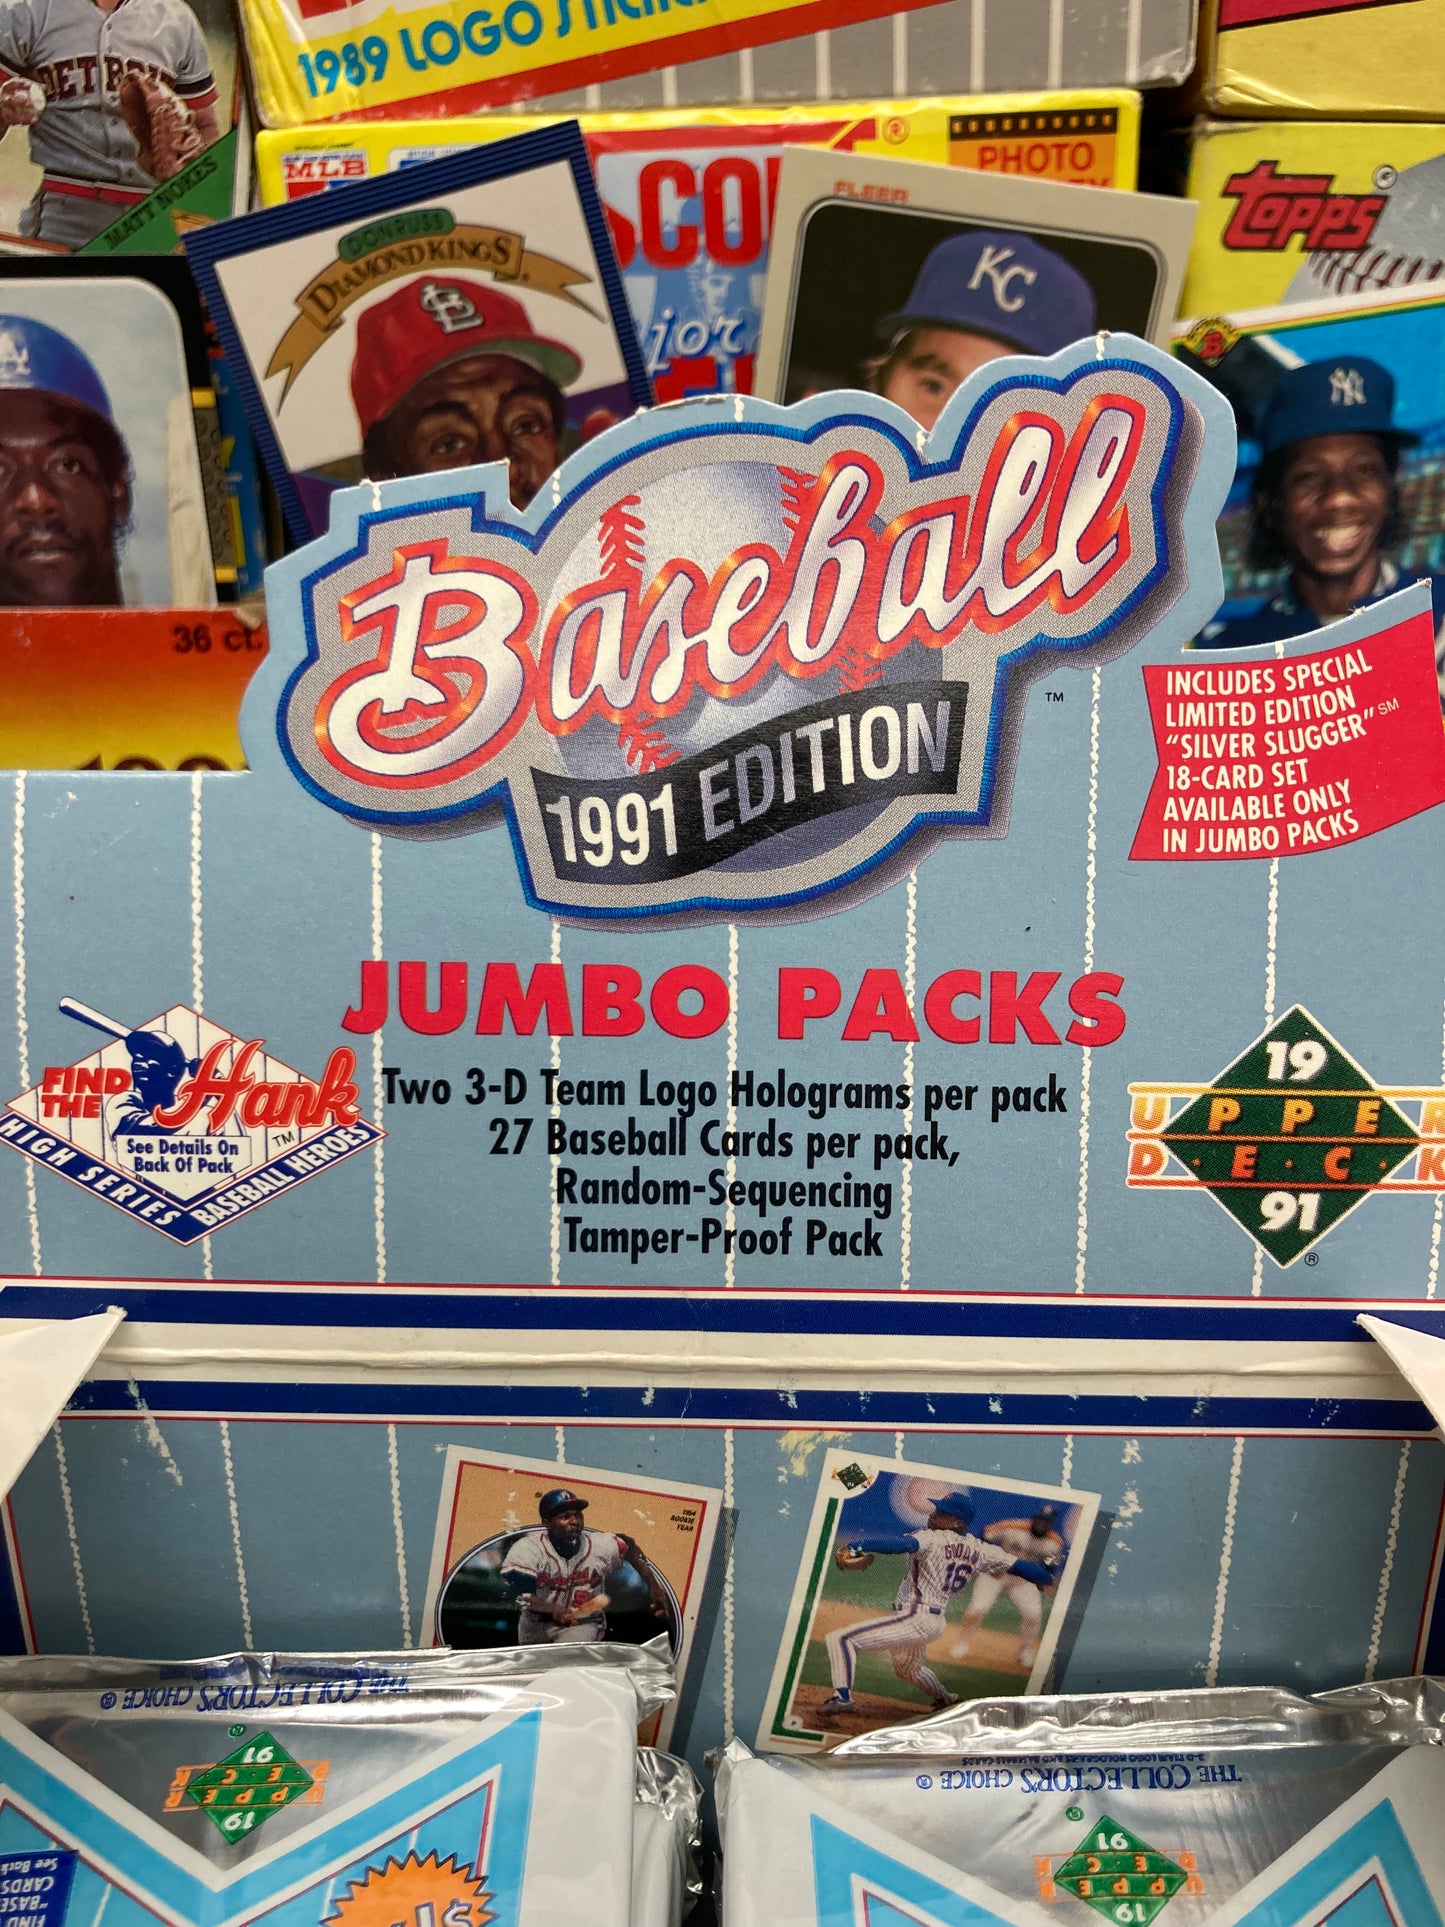 1991 Upper Deck Baseball High Series Jumbo Pack